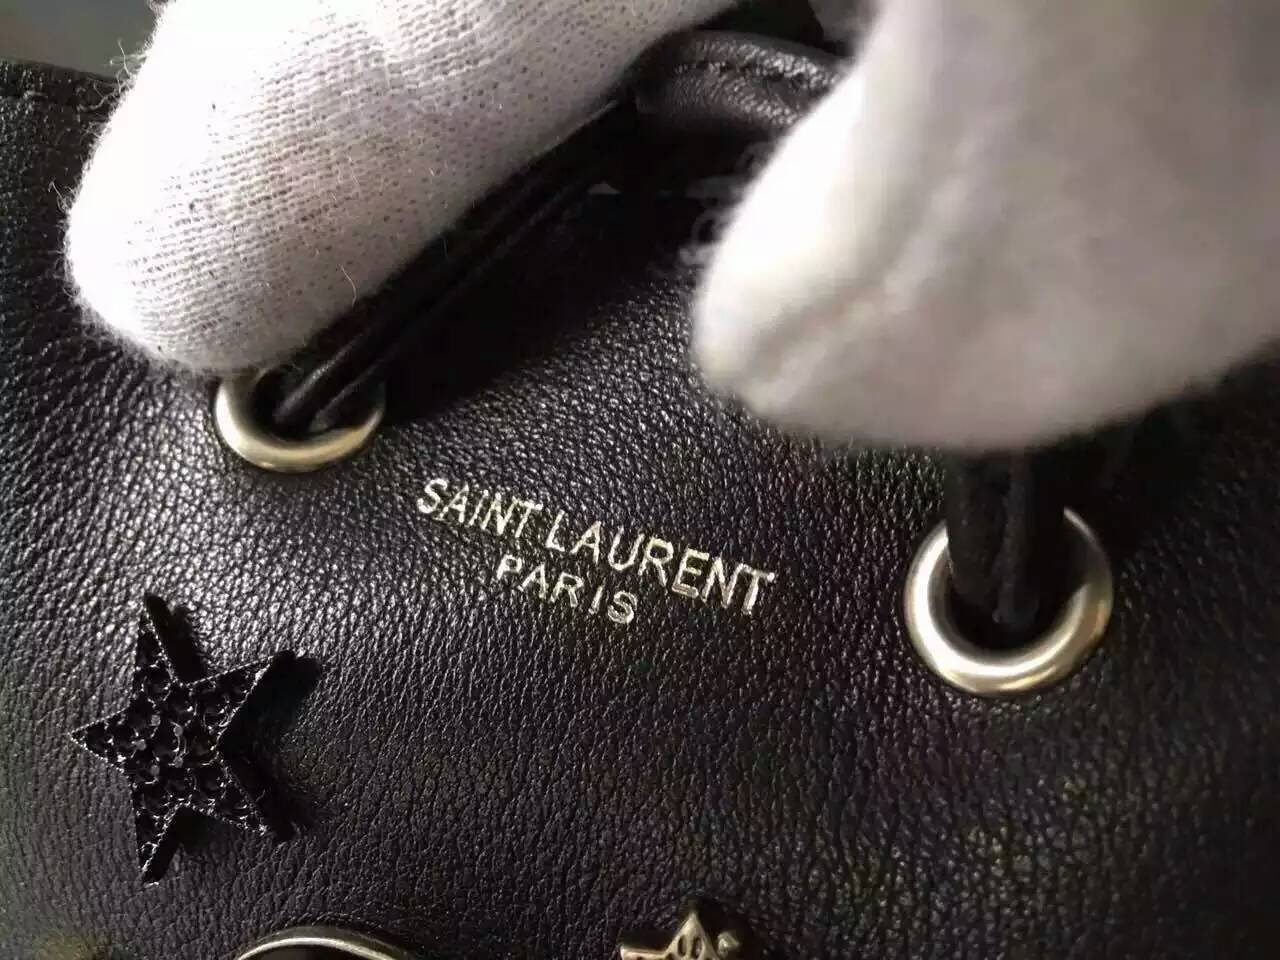 Limited Edition!2016 New Saint Laurent Bag Cheap Sale-Saint Laurent Small Emmanuelle Bucket Bag in Black Leather with Lipstick Decoration - Click Image to Close